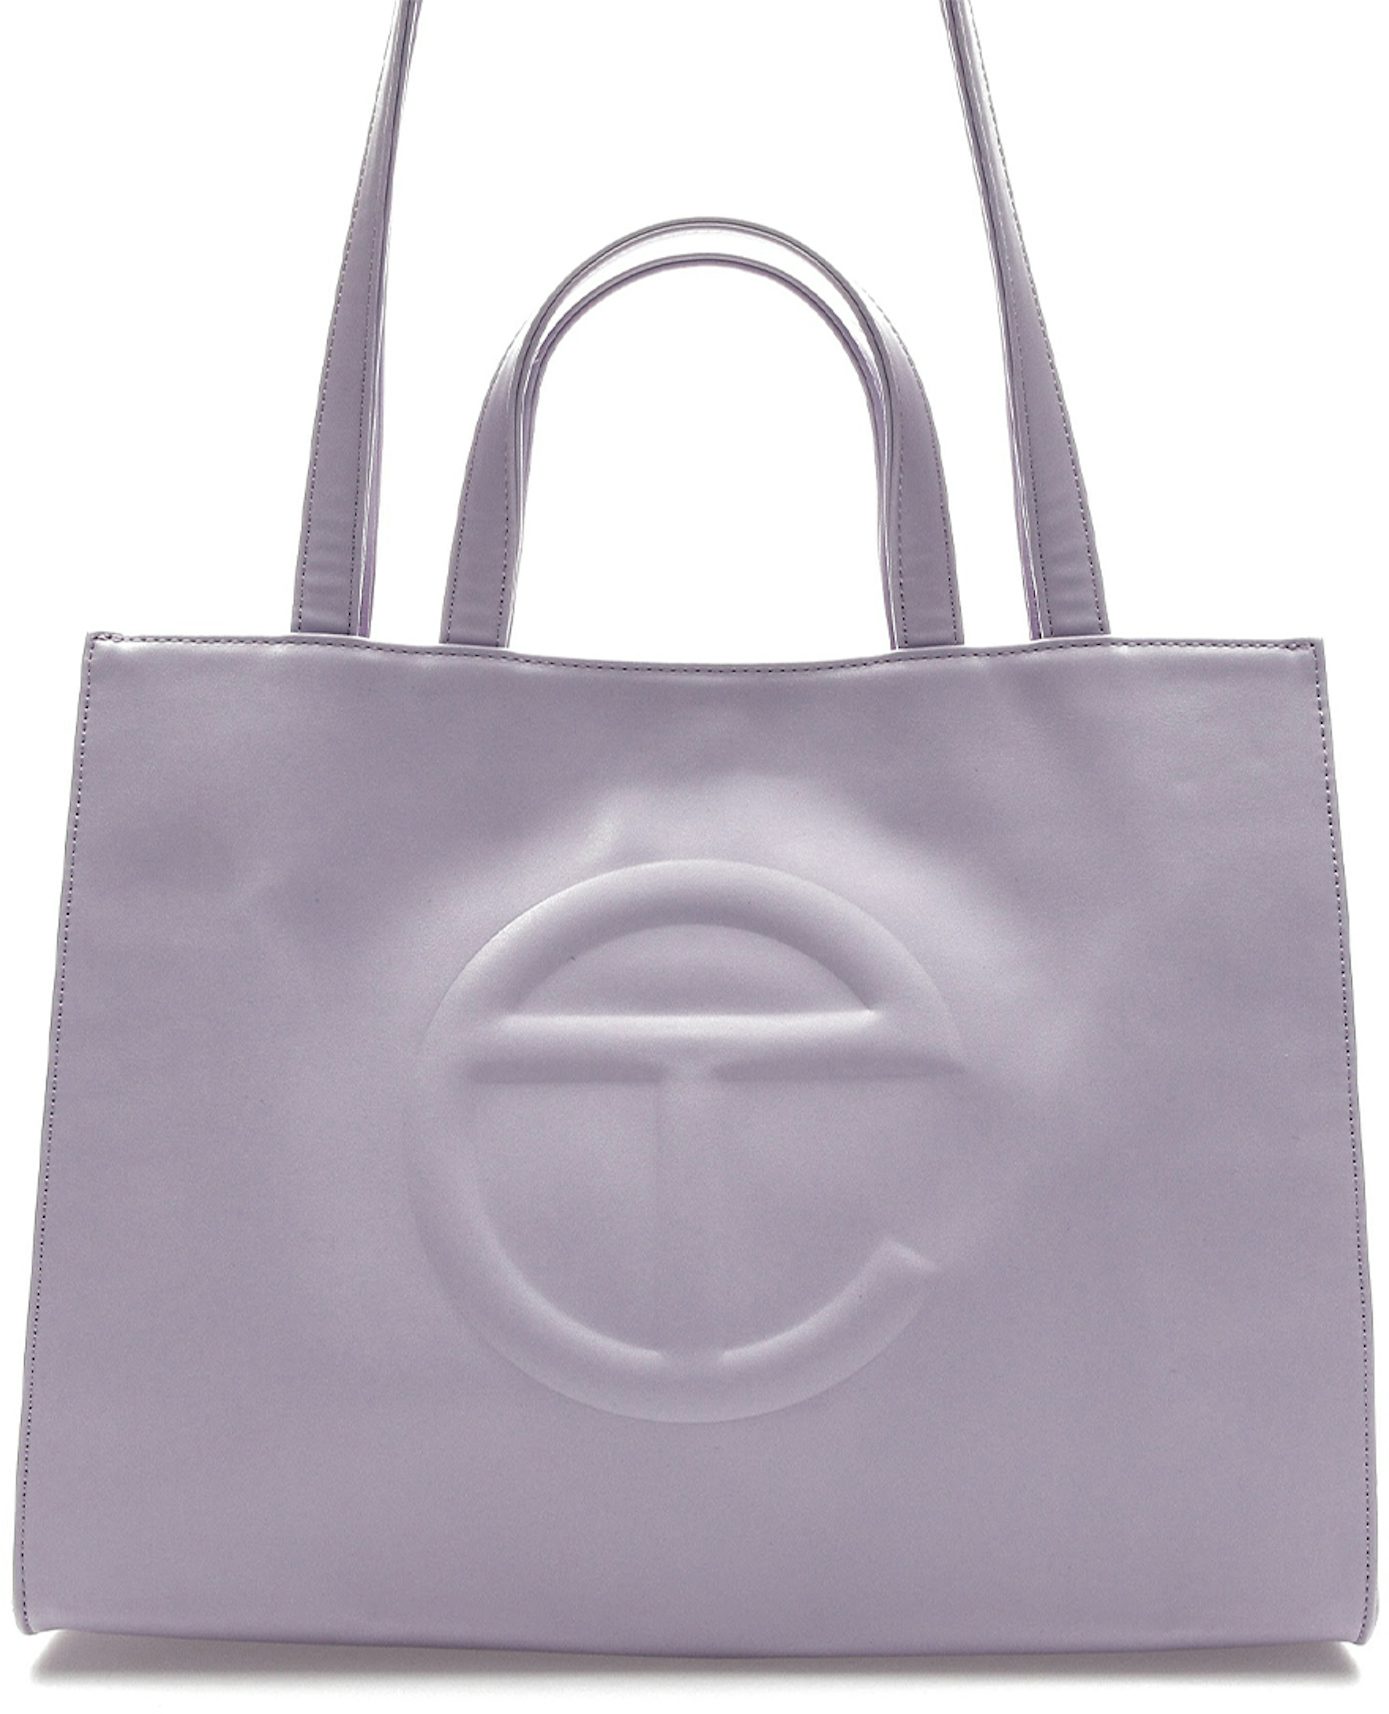 DR-Telfar Shopping Bag